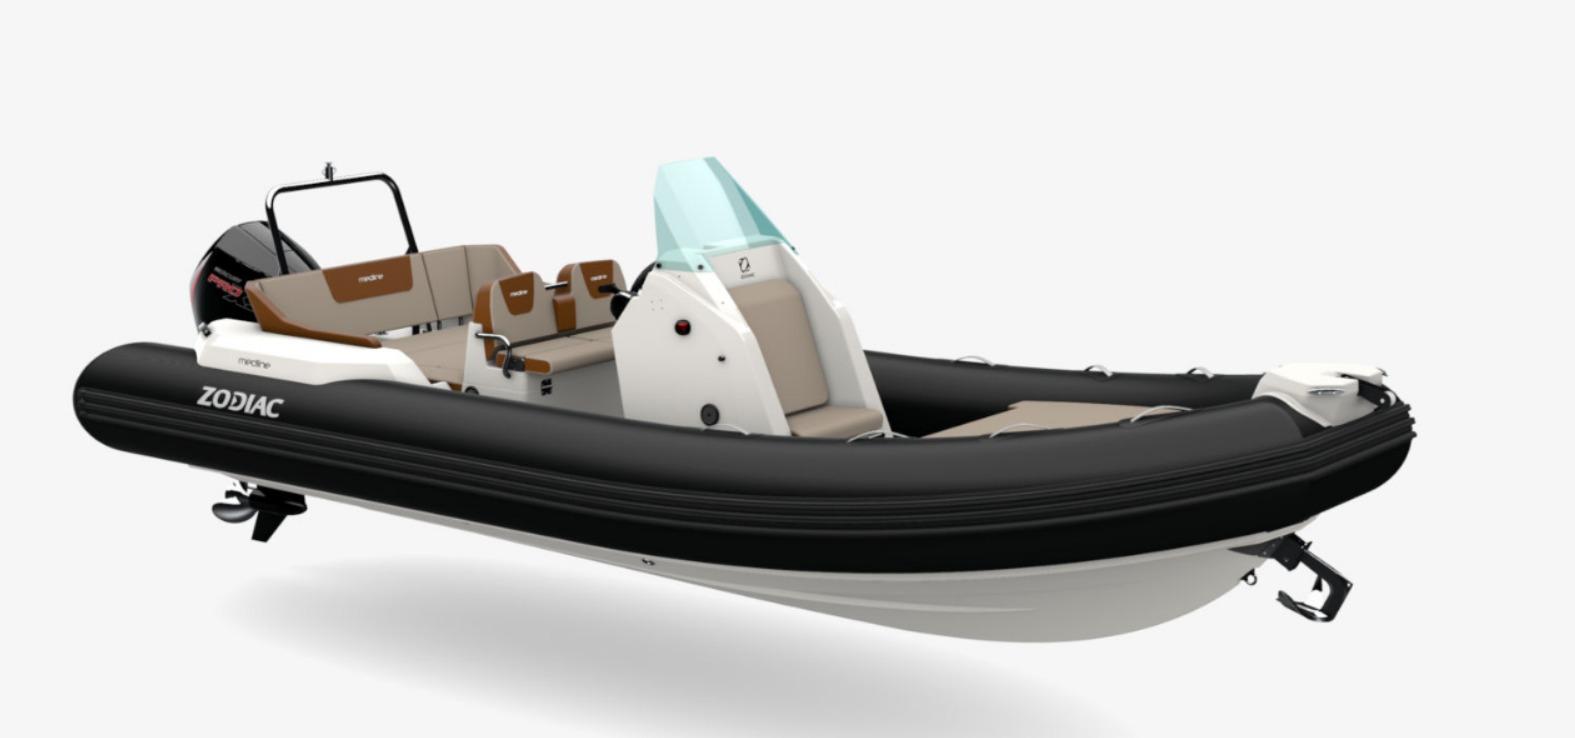 Bateau utilitaire - MK 4 HD - Zodiac Milpro International - hors-bord /  bateau pneumatique pliable